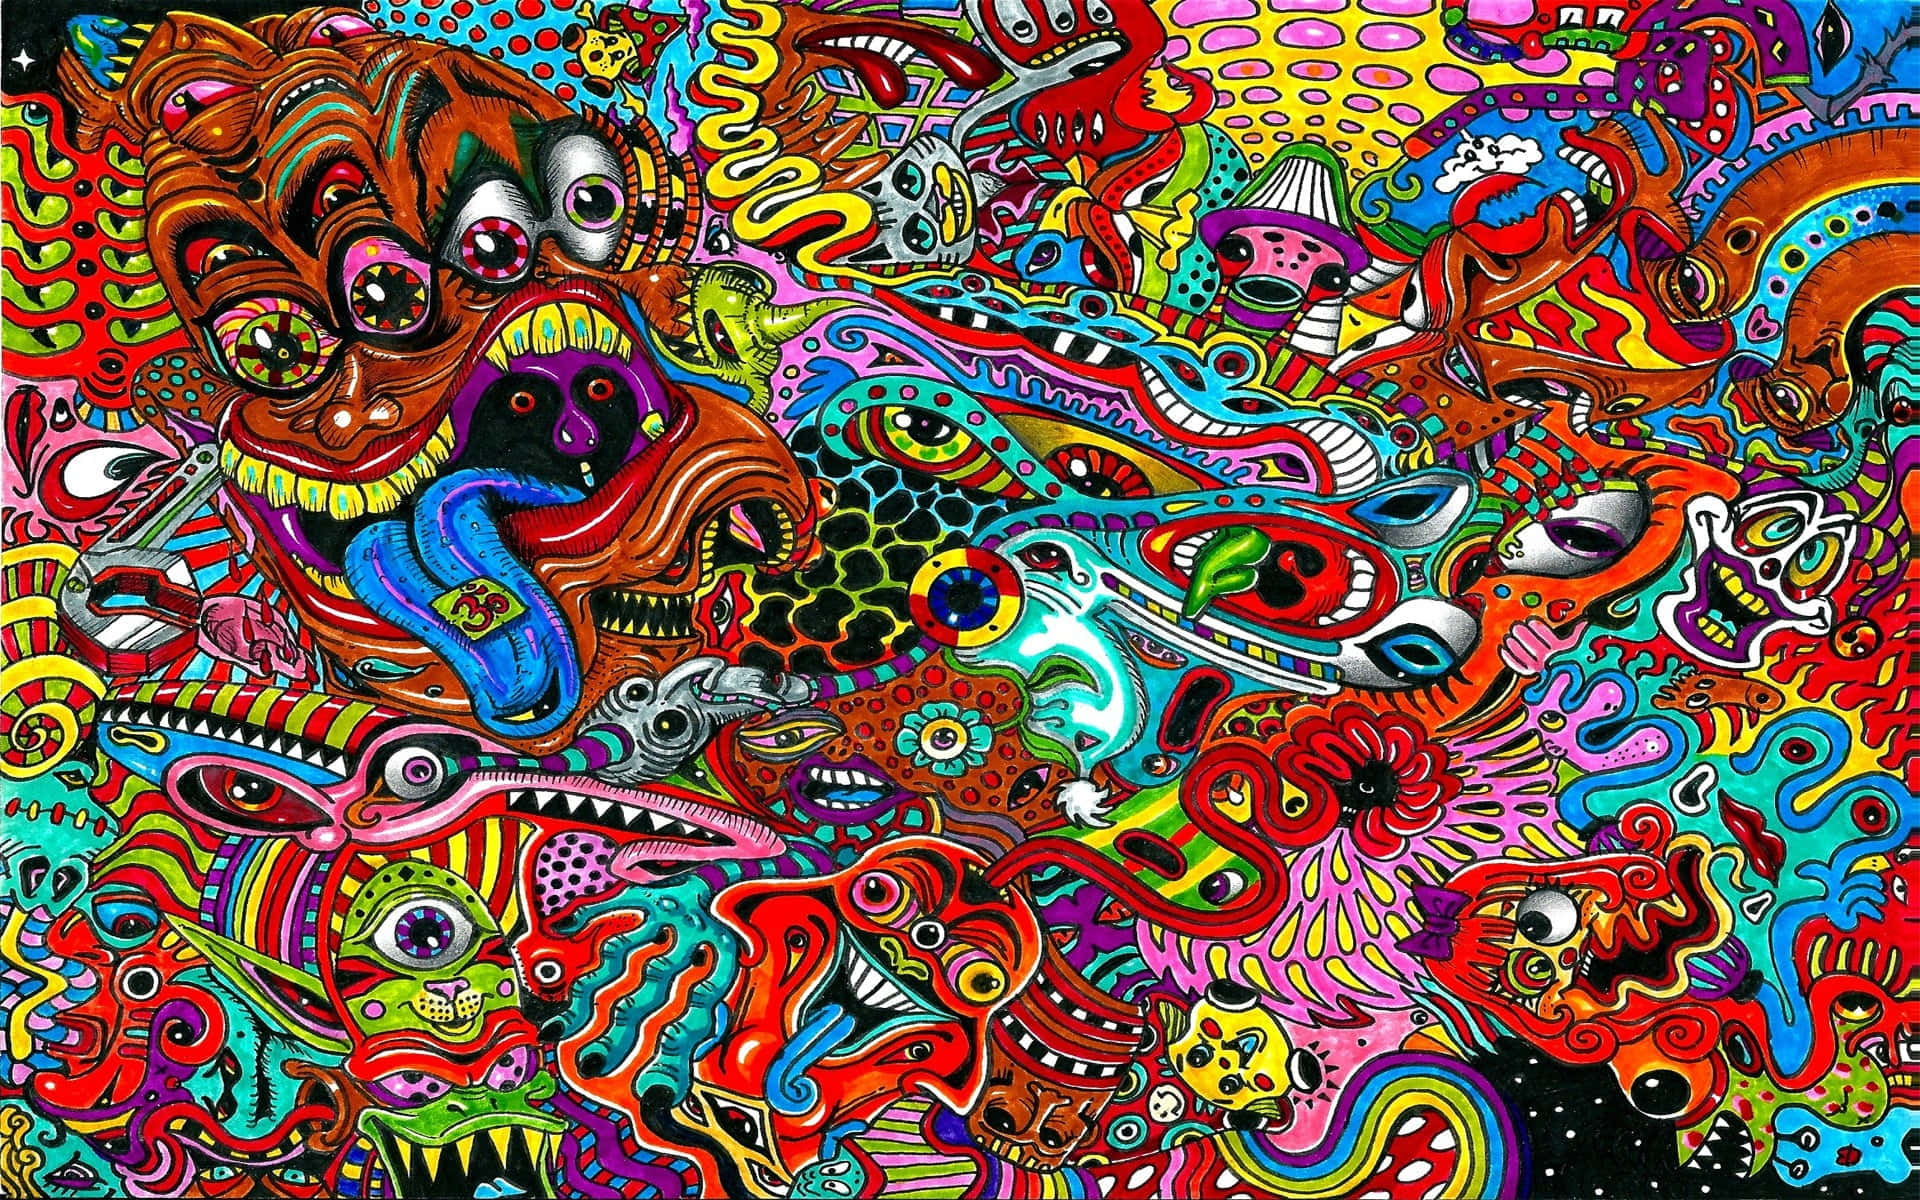 Abstraktespsychedelisches Doodle-kunstbild